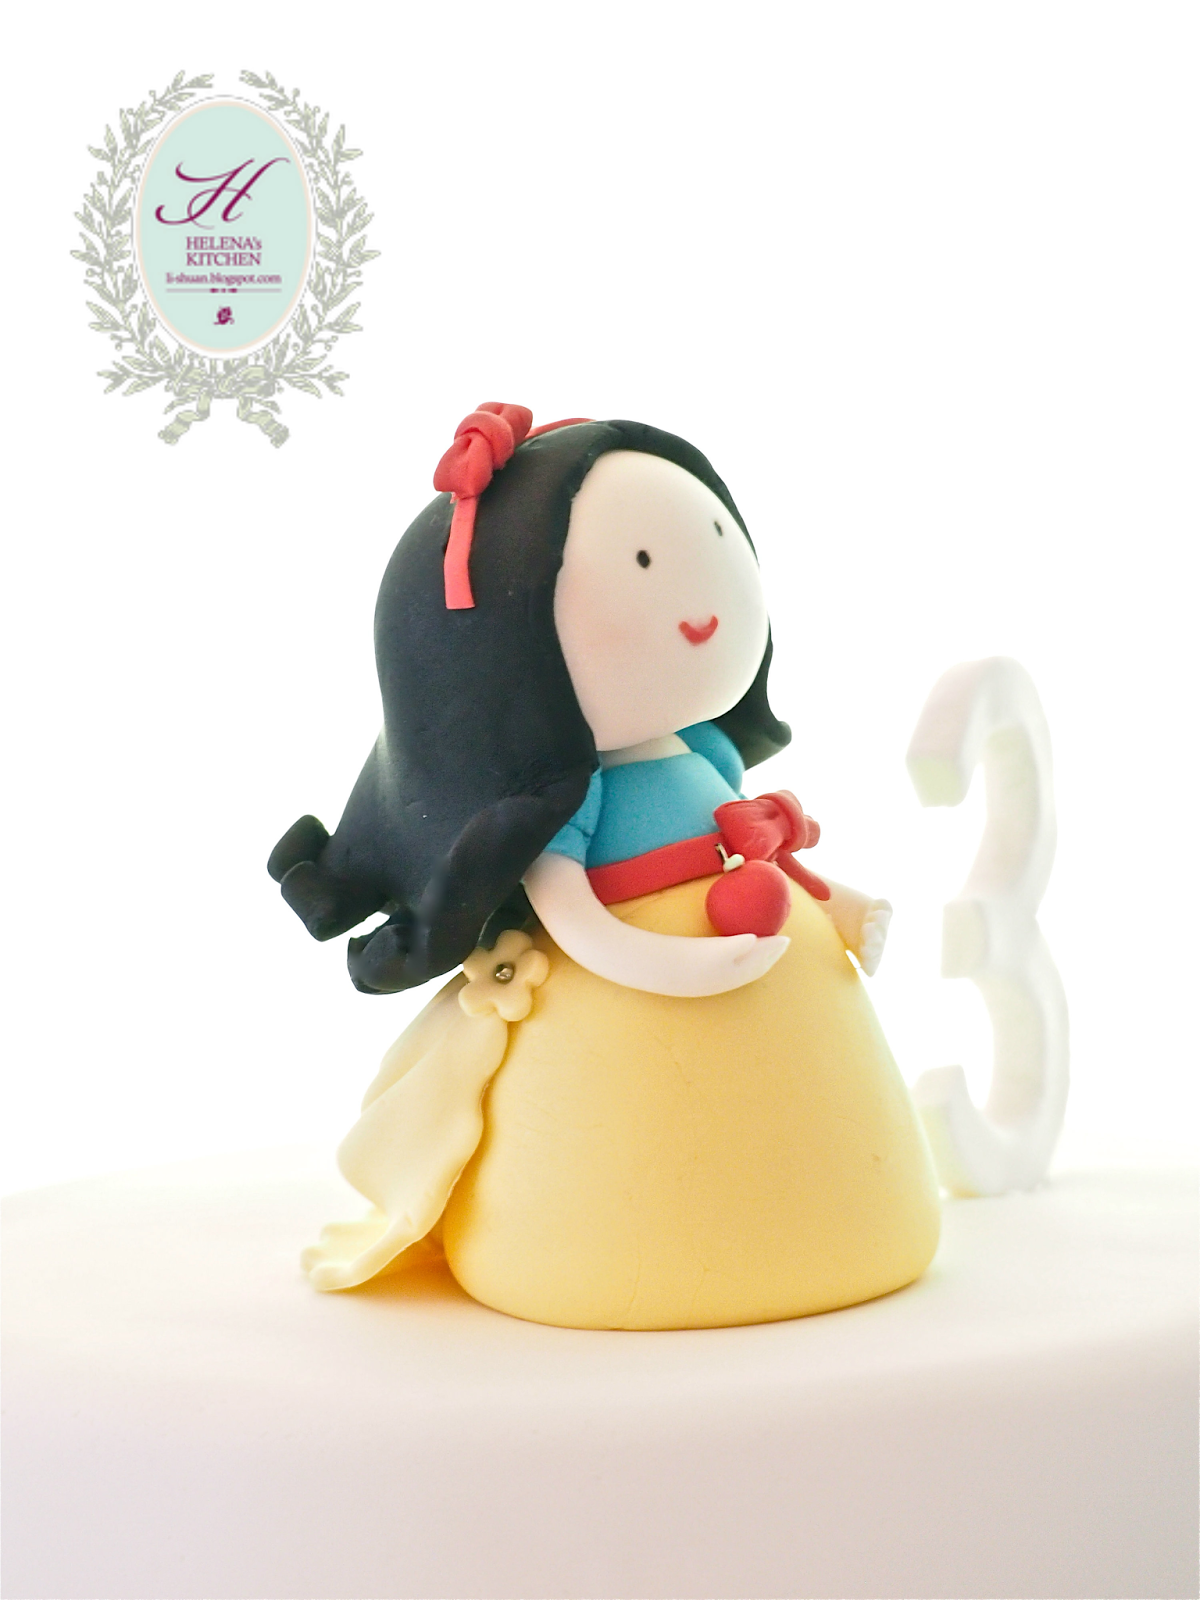 【Benny cake】白雪公主蛋糕 | The Snow White Cake_哔哩哔哩_bilibili